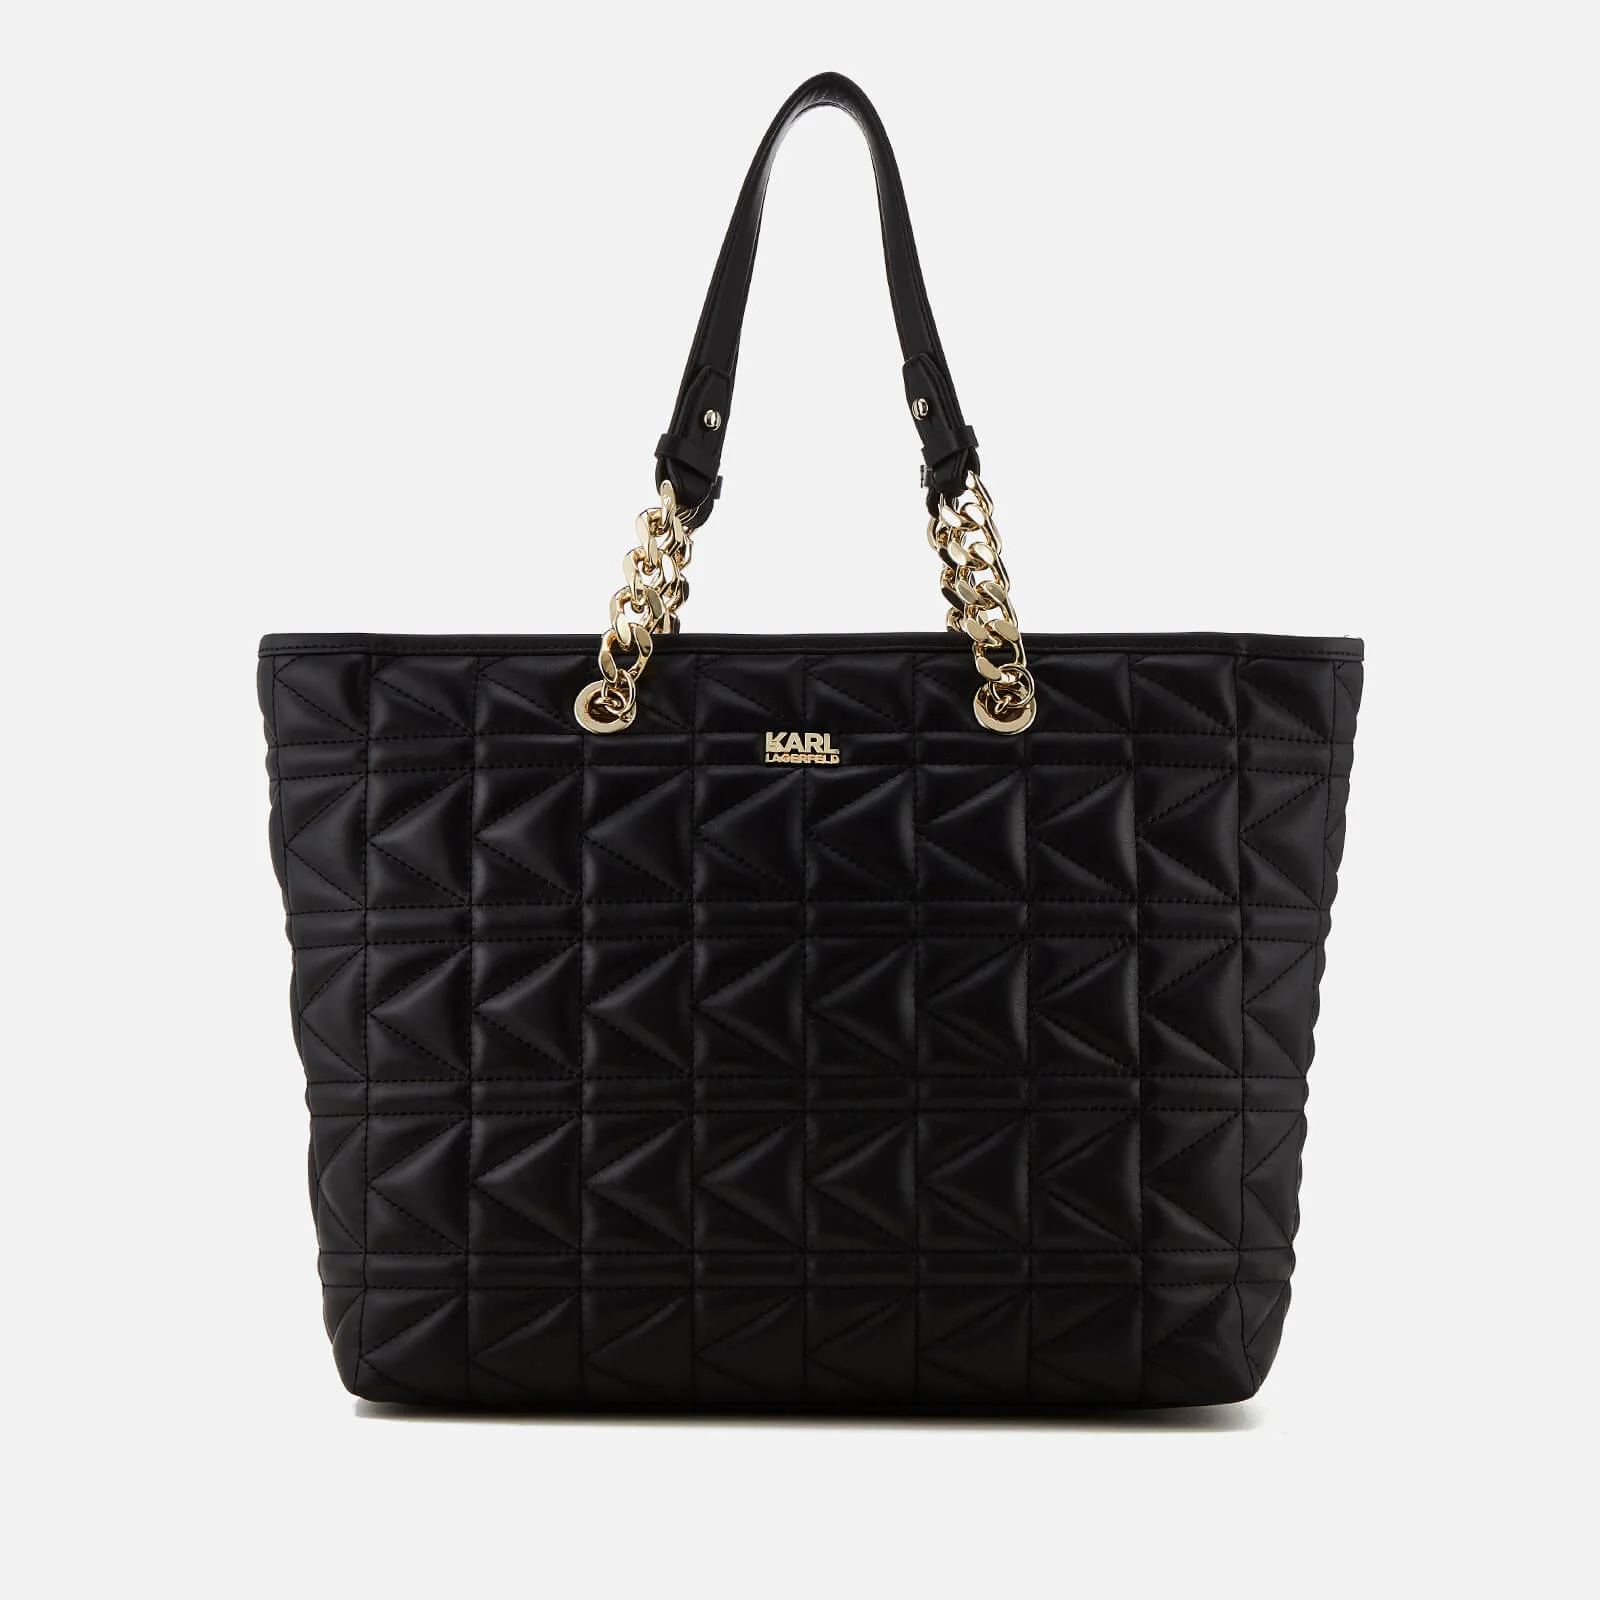 Karl Lagerfeld Women's K/Kuilted Shopper Bag Core - Black/Gold Image 1